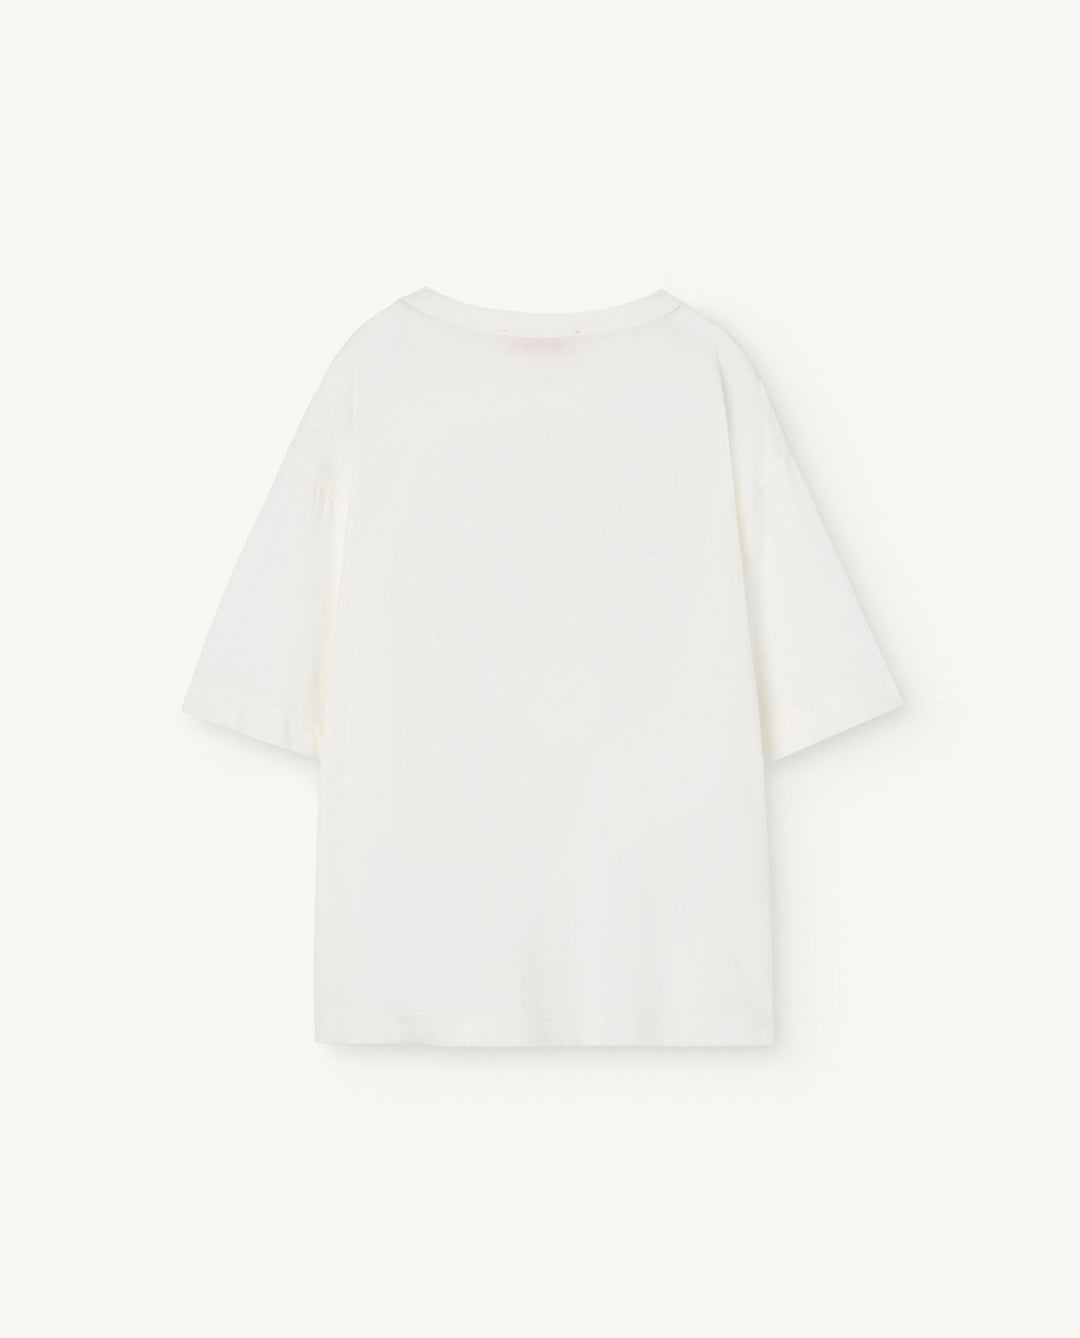 Rooster Oversized T-Shirt - White - Posh New York